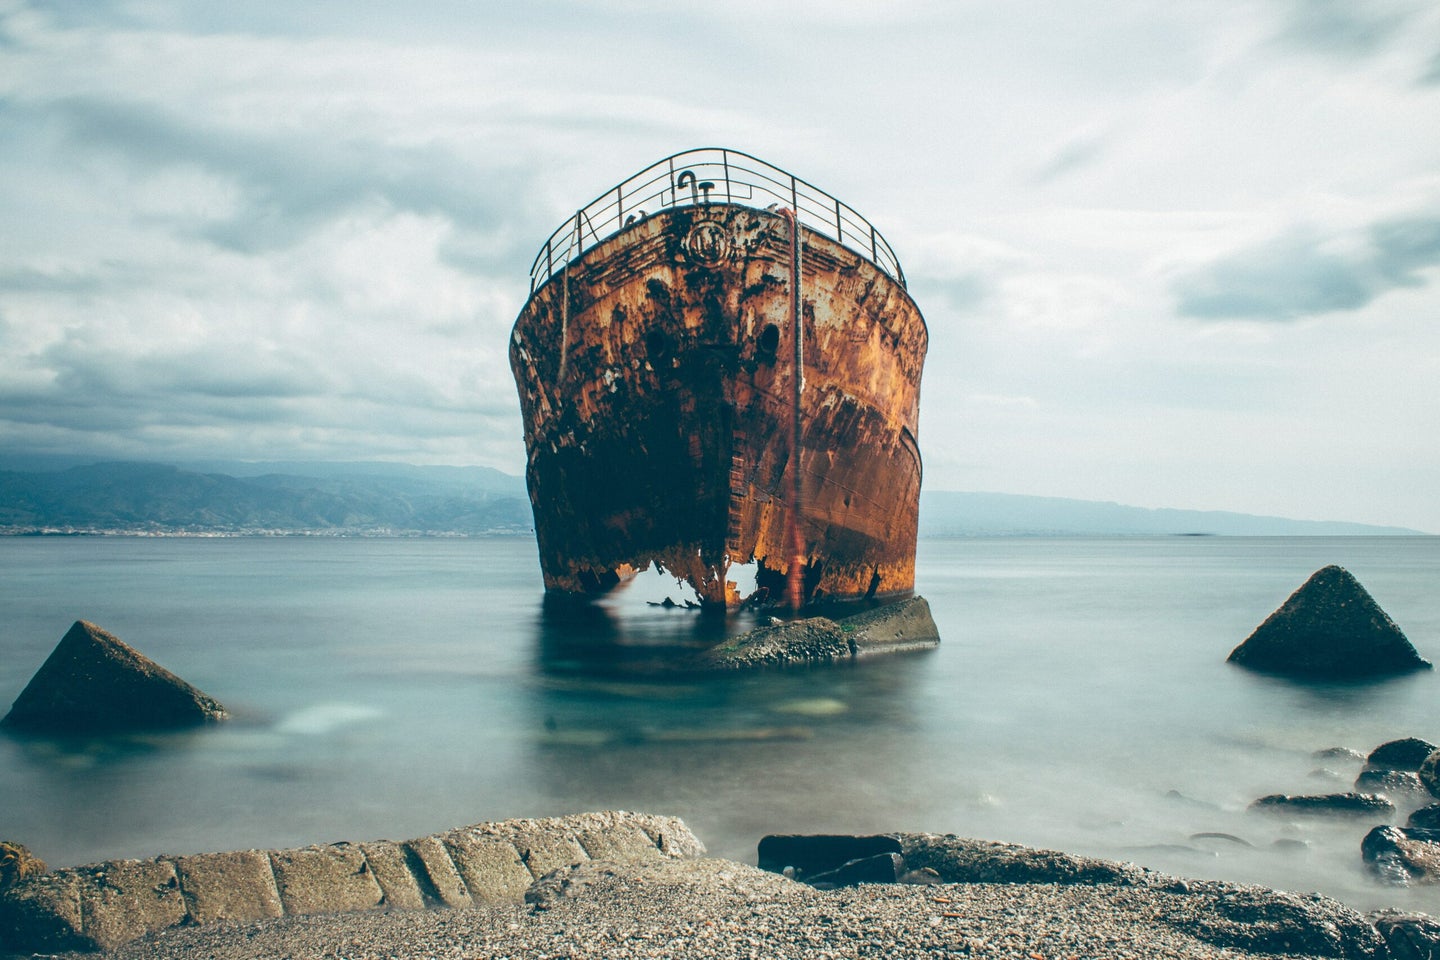 Shipwreck on shore